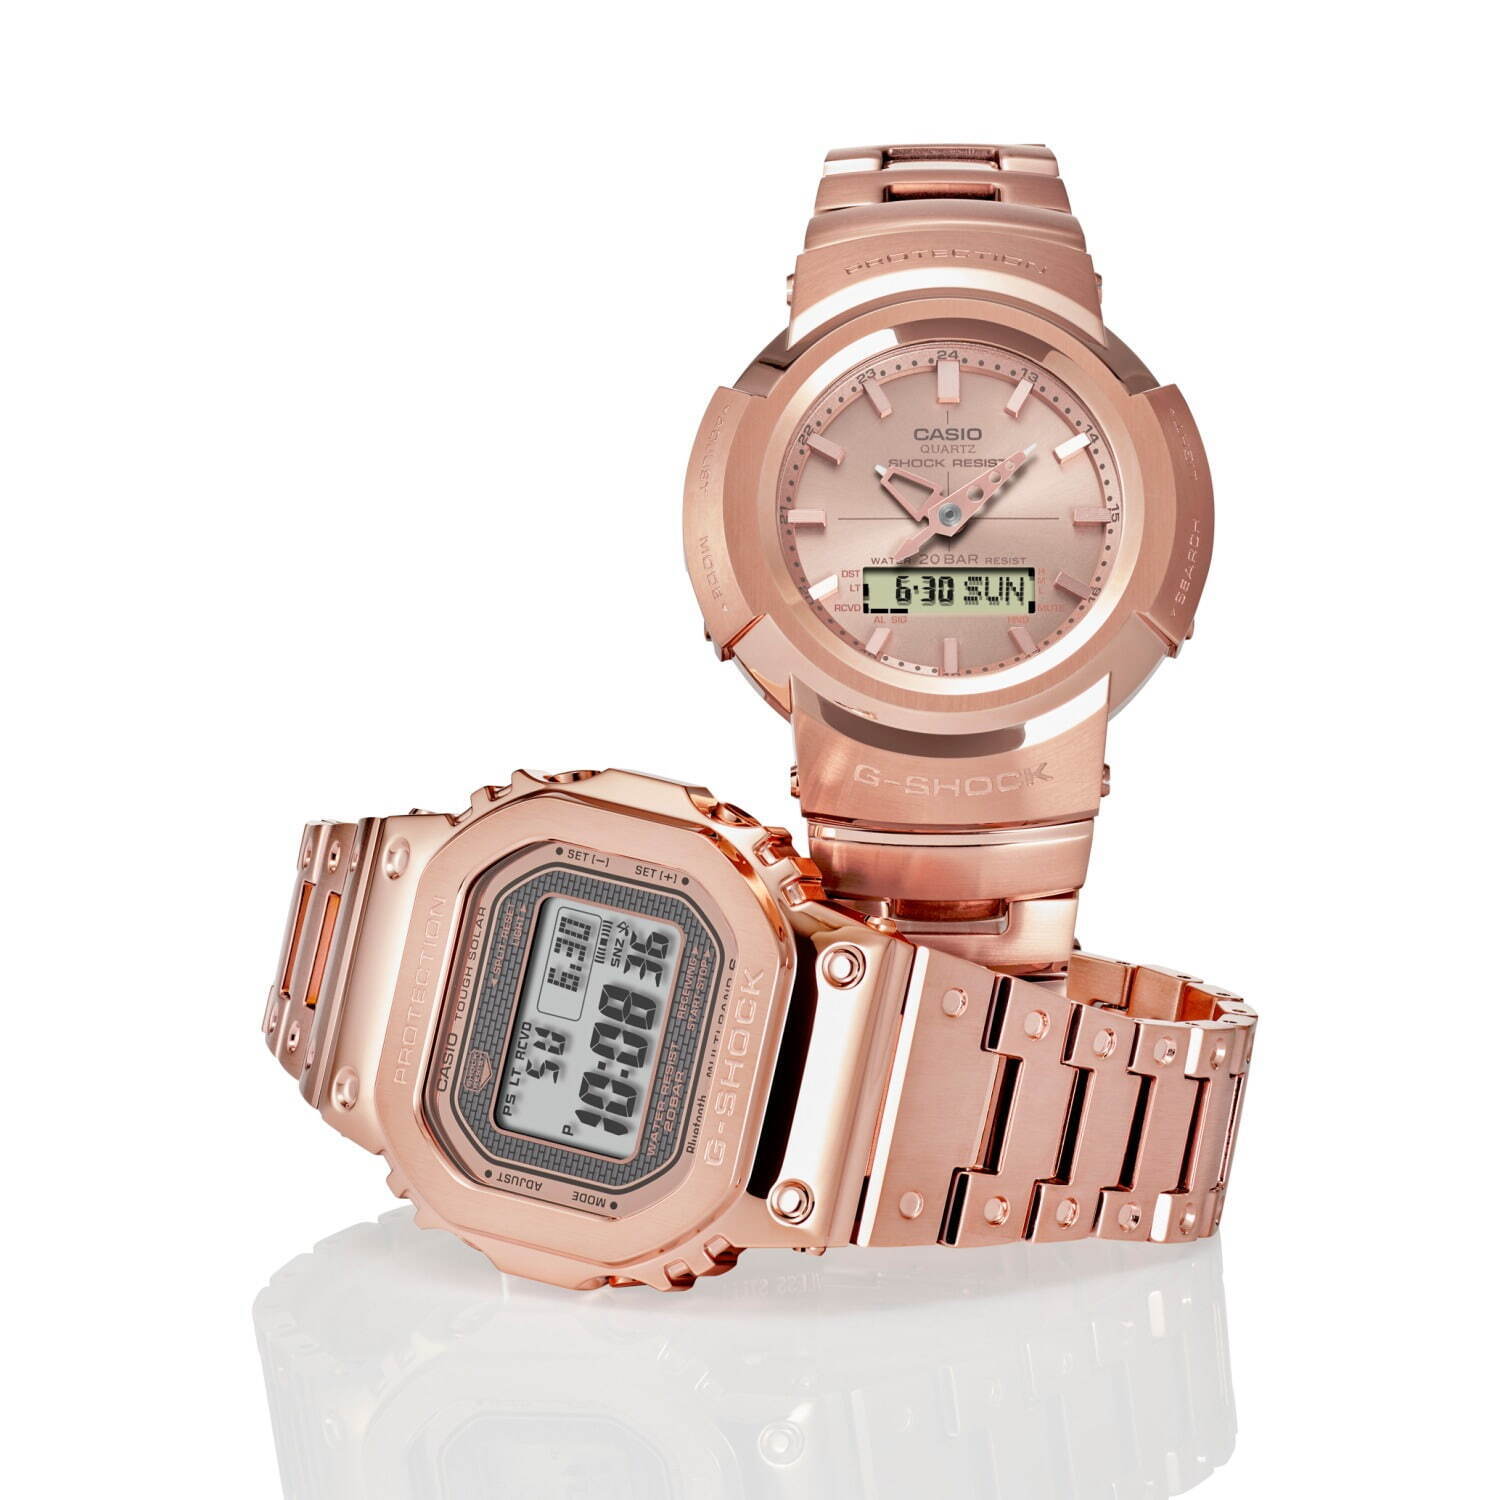 G-SHOCK“ローズゴールド”のフルメタル腕時計、“金属の塊”から削りだ